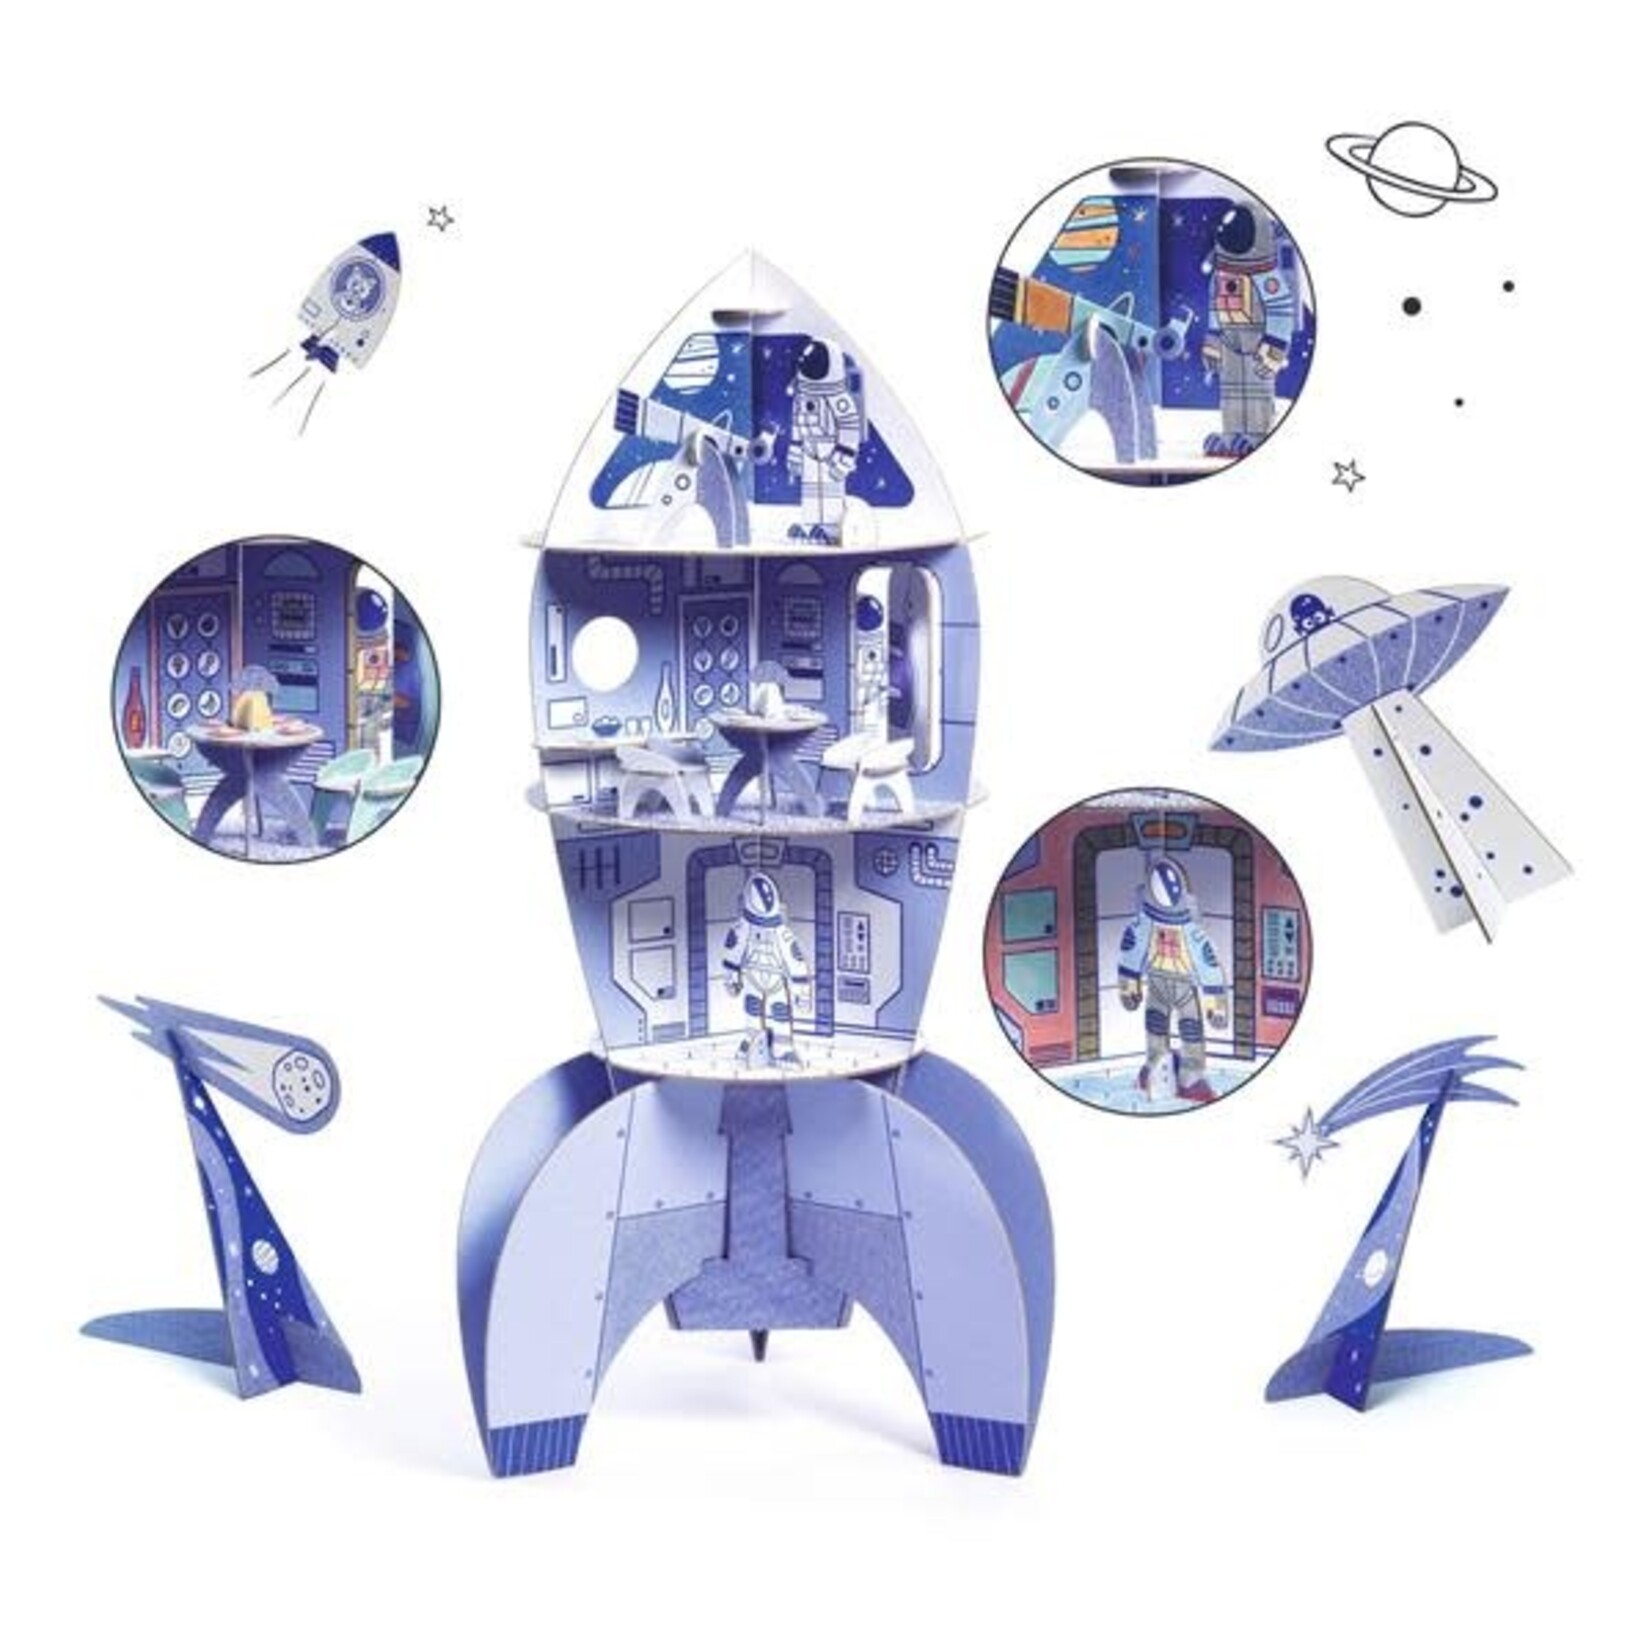 Djeco DJECO - 'Color Assemble Play' DIY Creative Kit - Space rocket